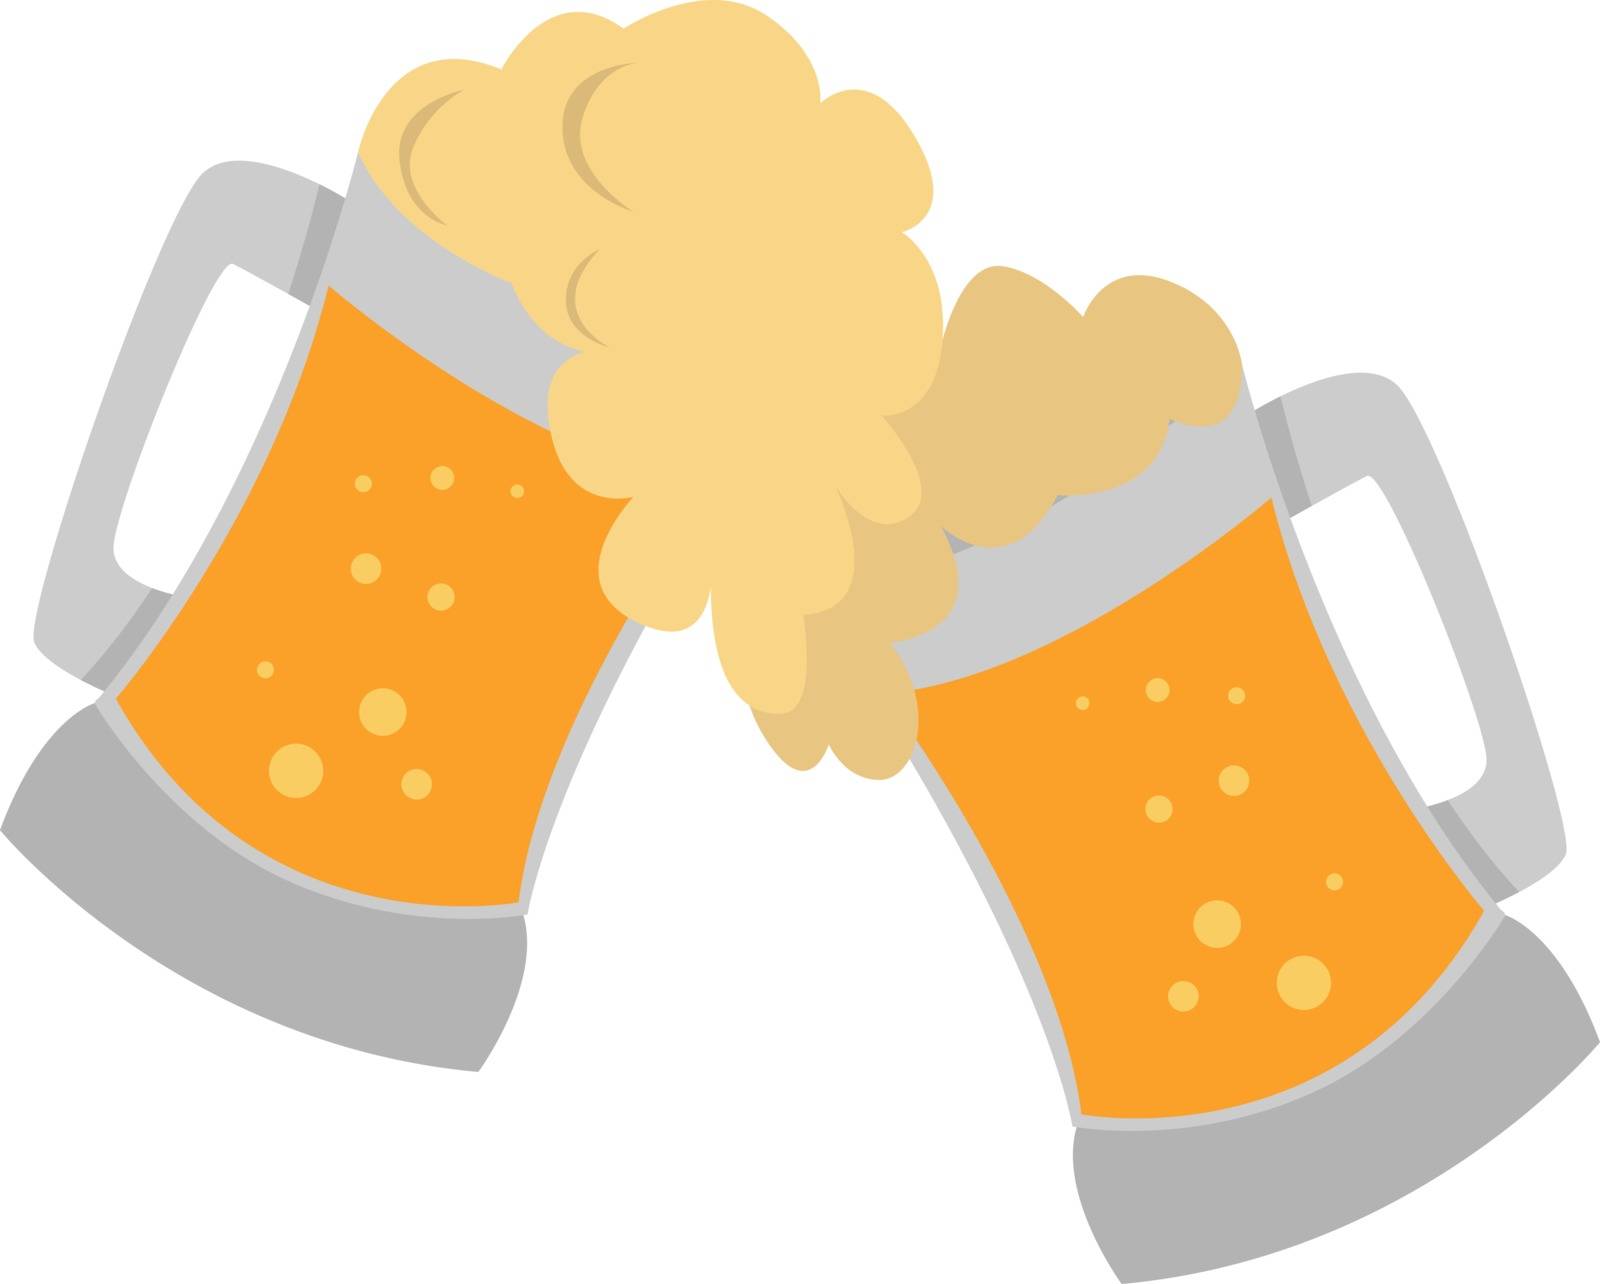 Draft beer, illustration, vector on white background.